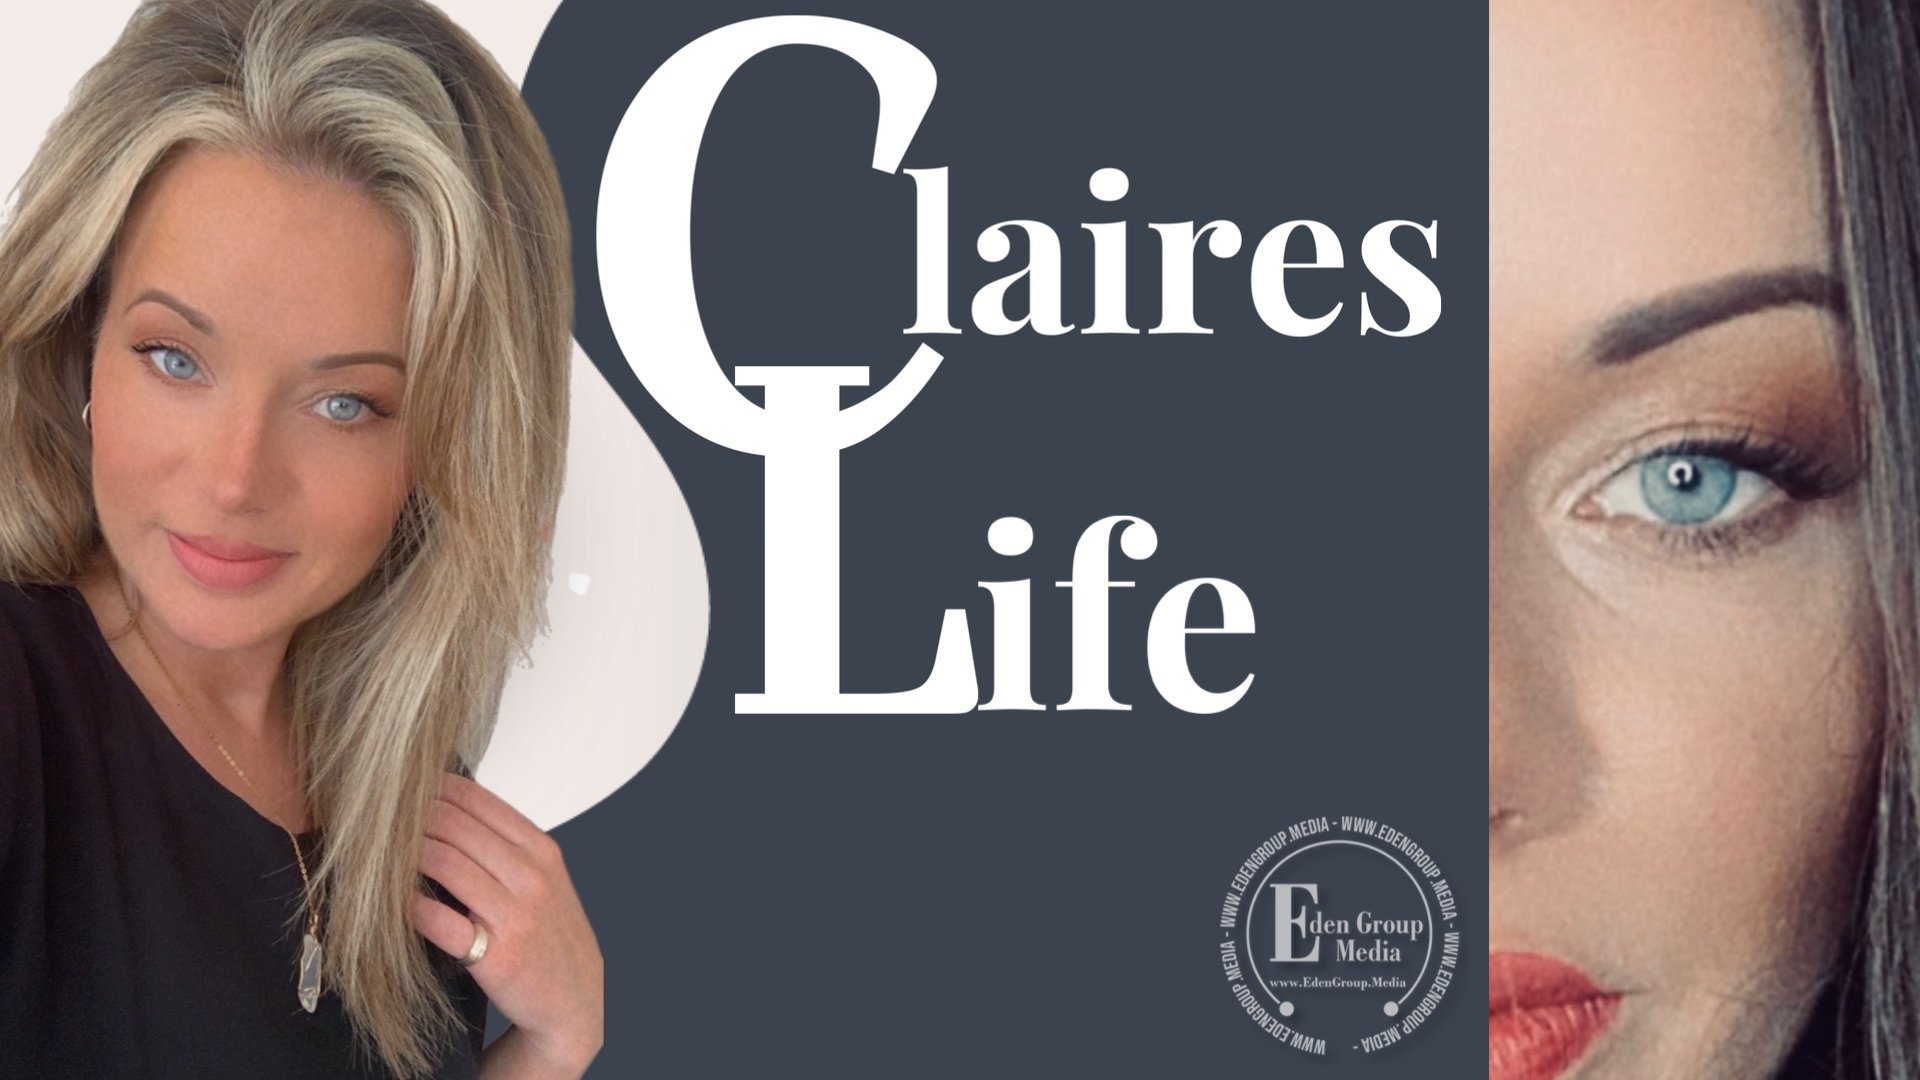 Claire's Life